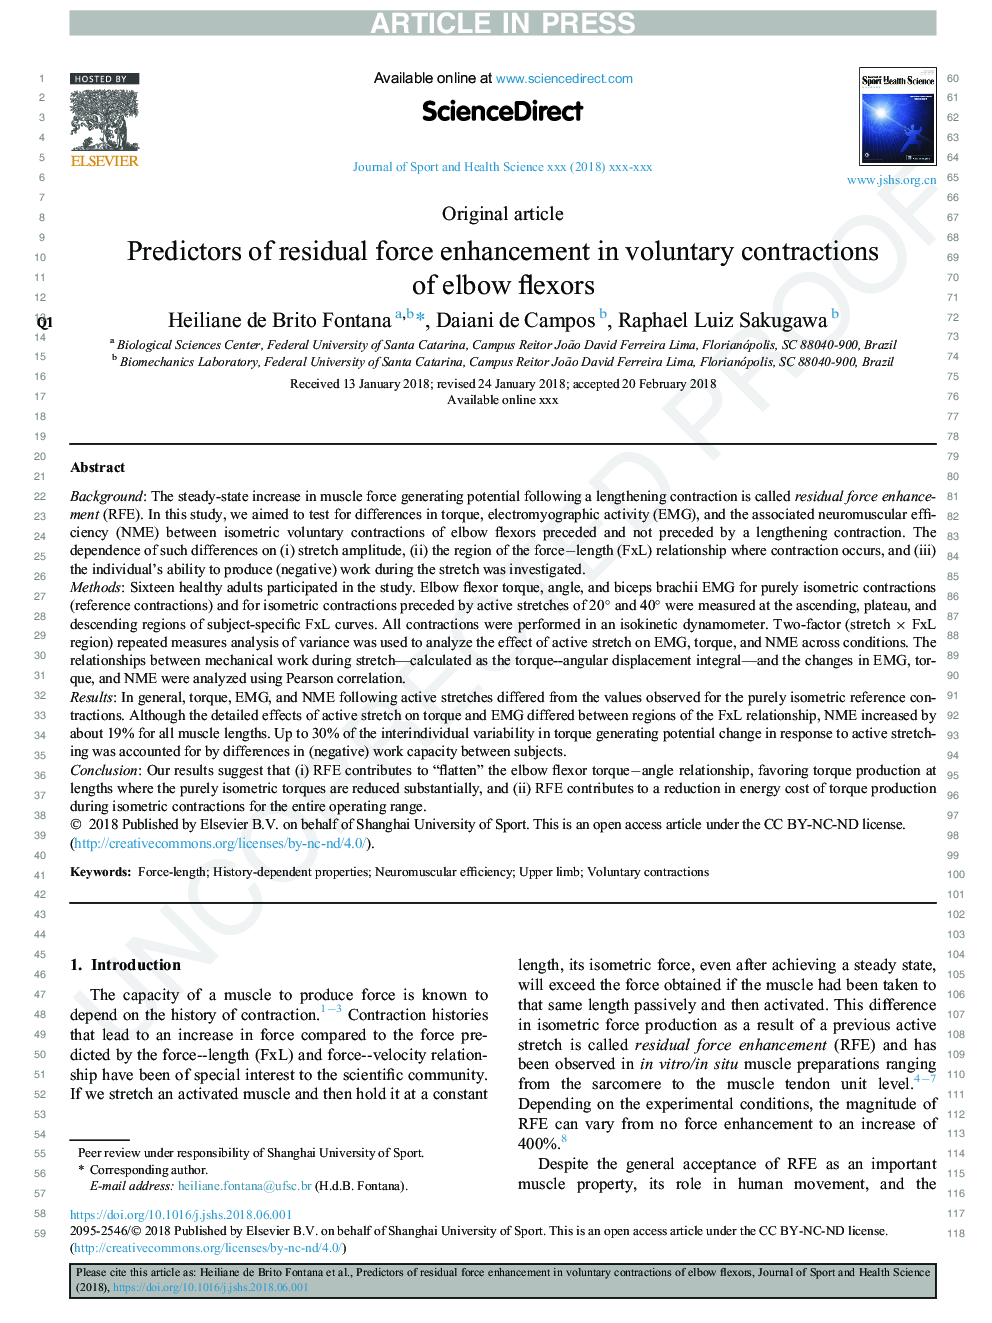 Predictors of residual force enhancement in voluntary contractions of elbow flexors